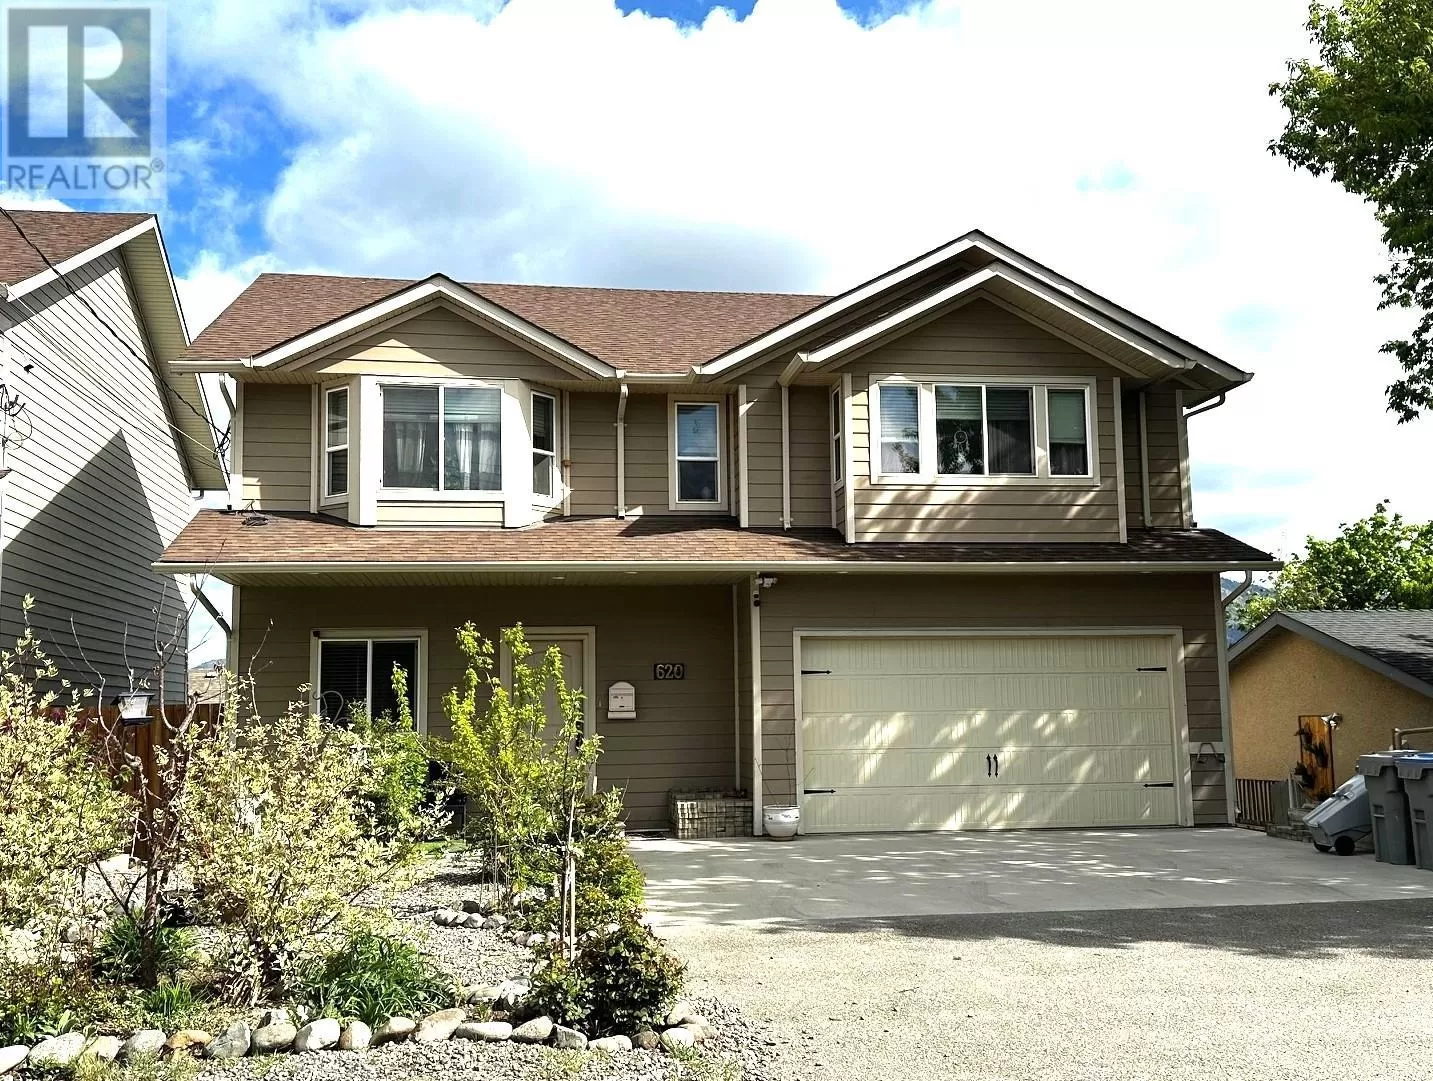 House for rent: 620 Hemlock Street, Kamloops, British Columbia V2C 1C5